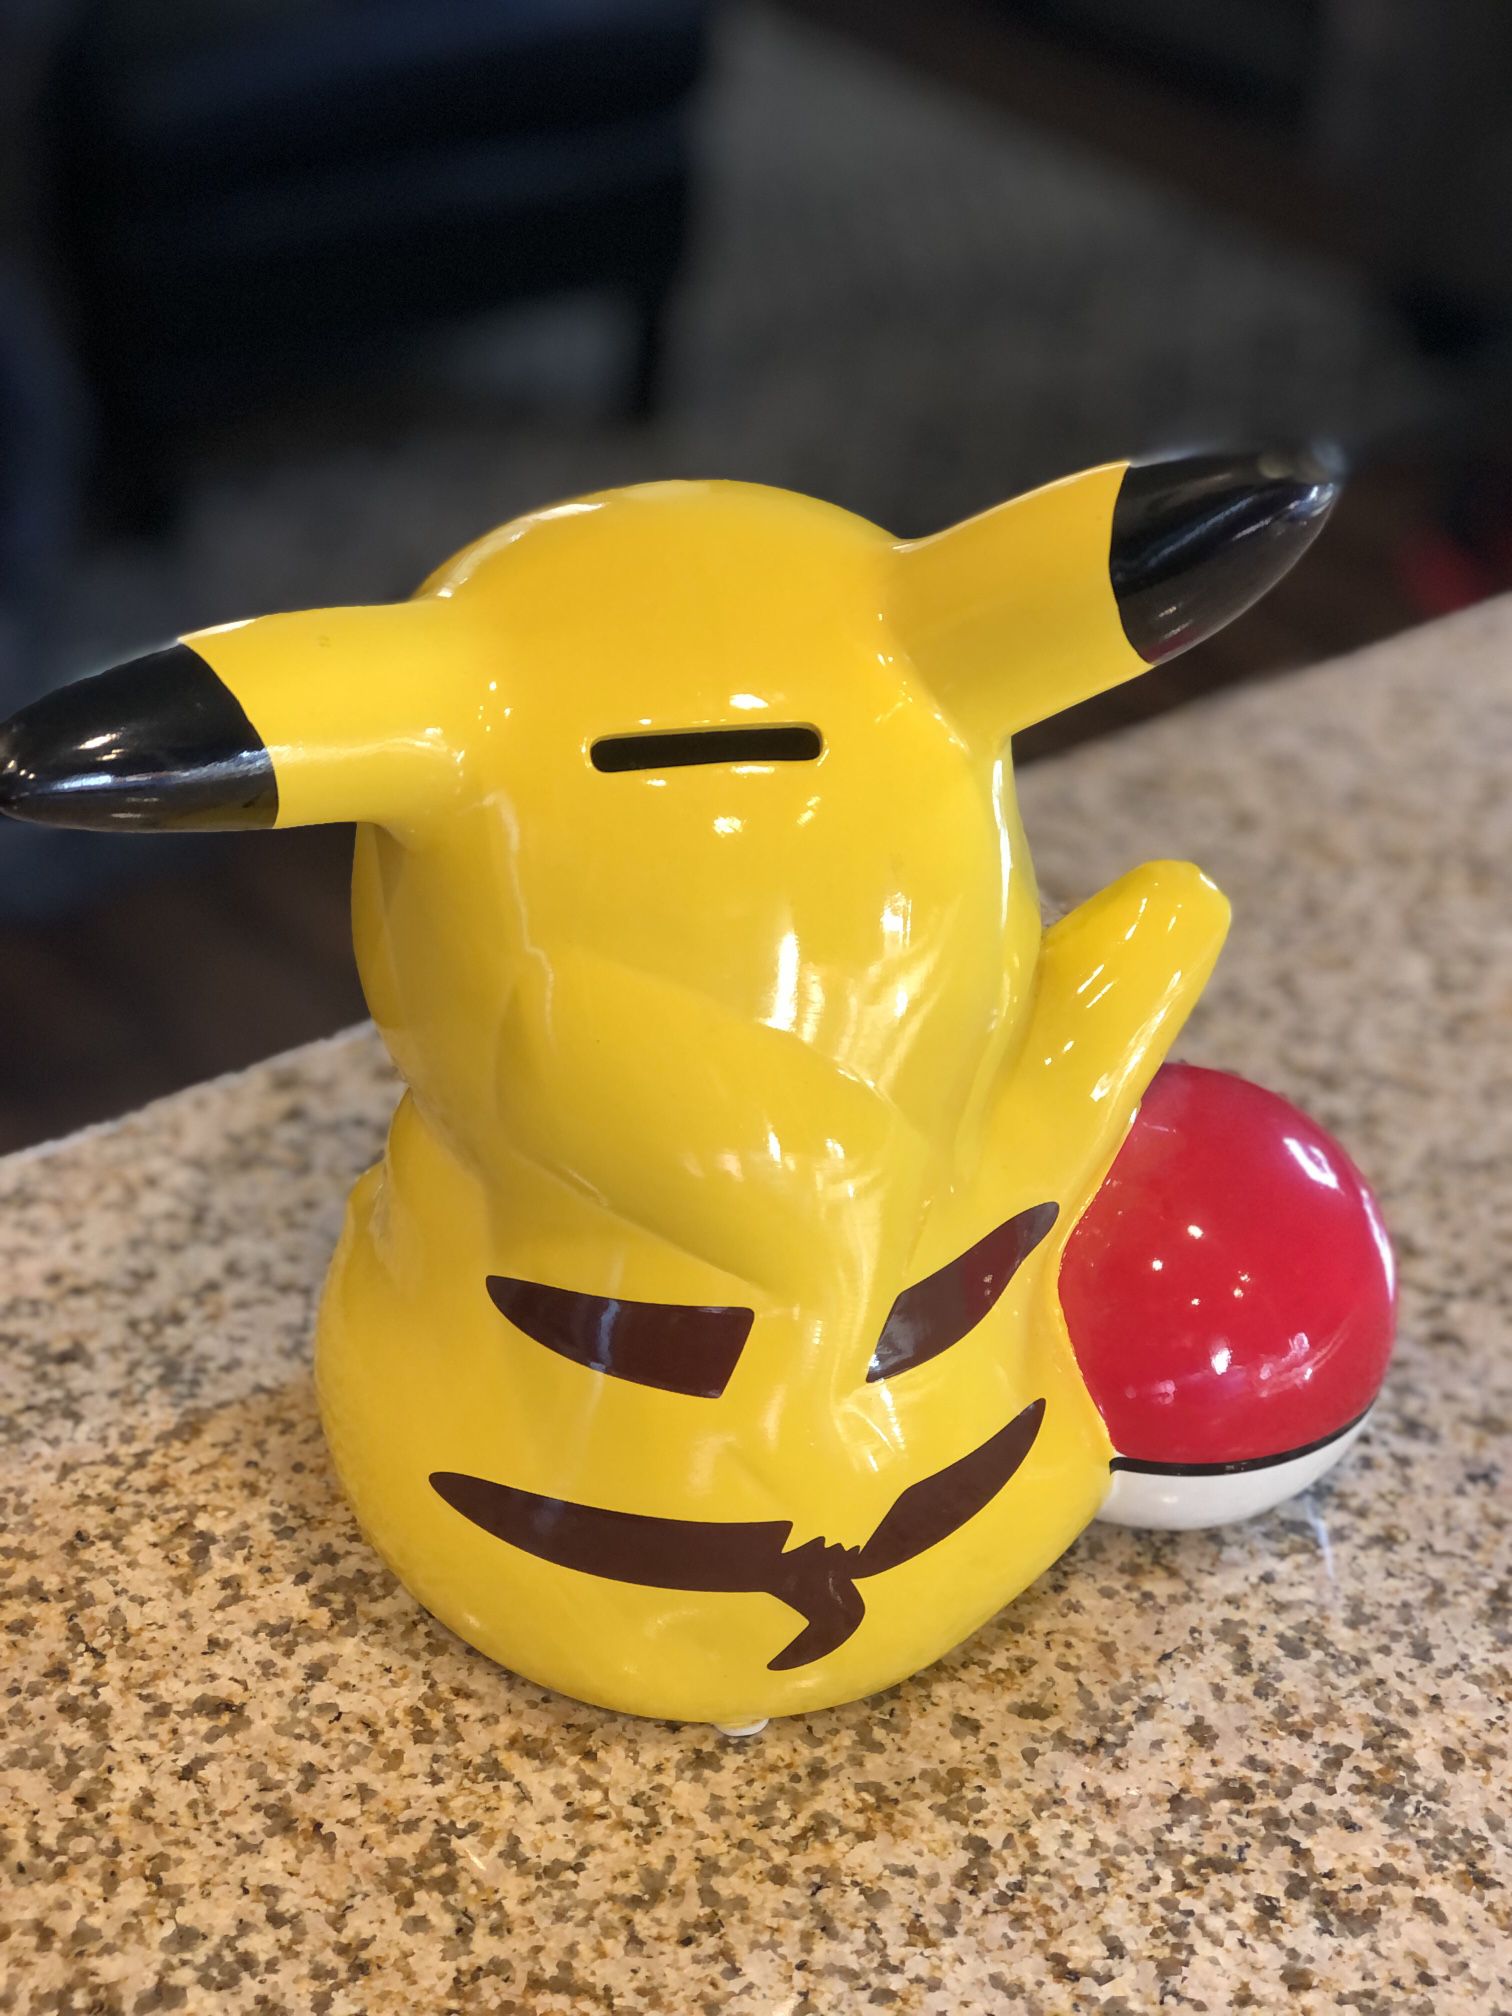 Pokémon Pikachu Ceramic Coin Piggy Bank